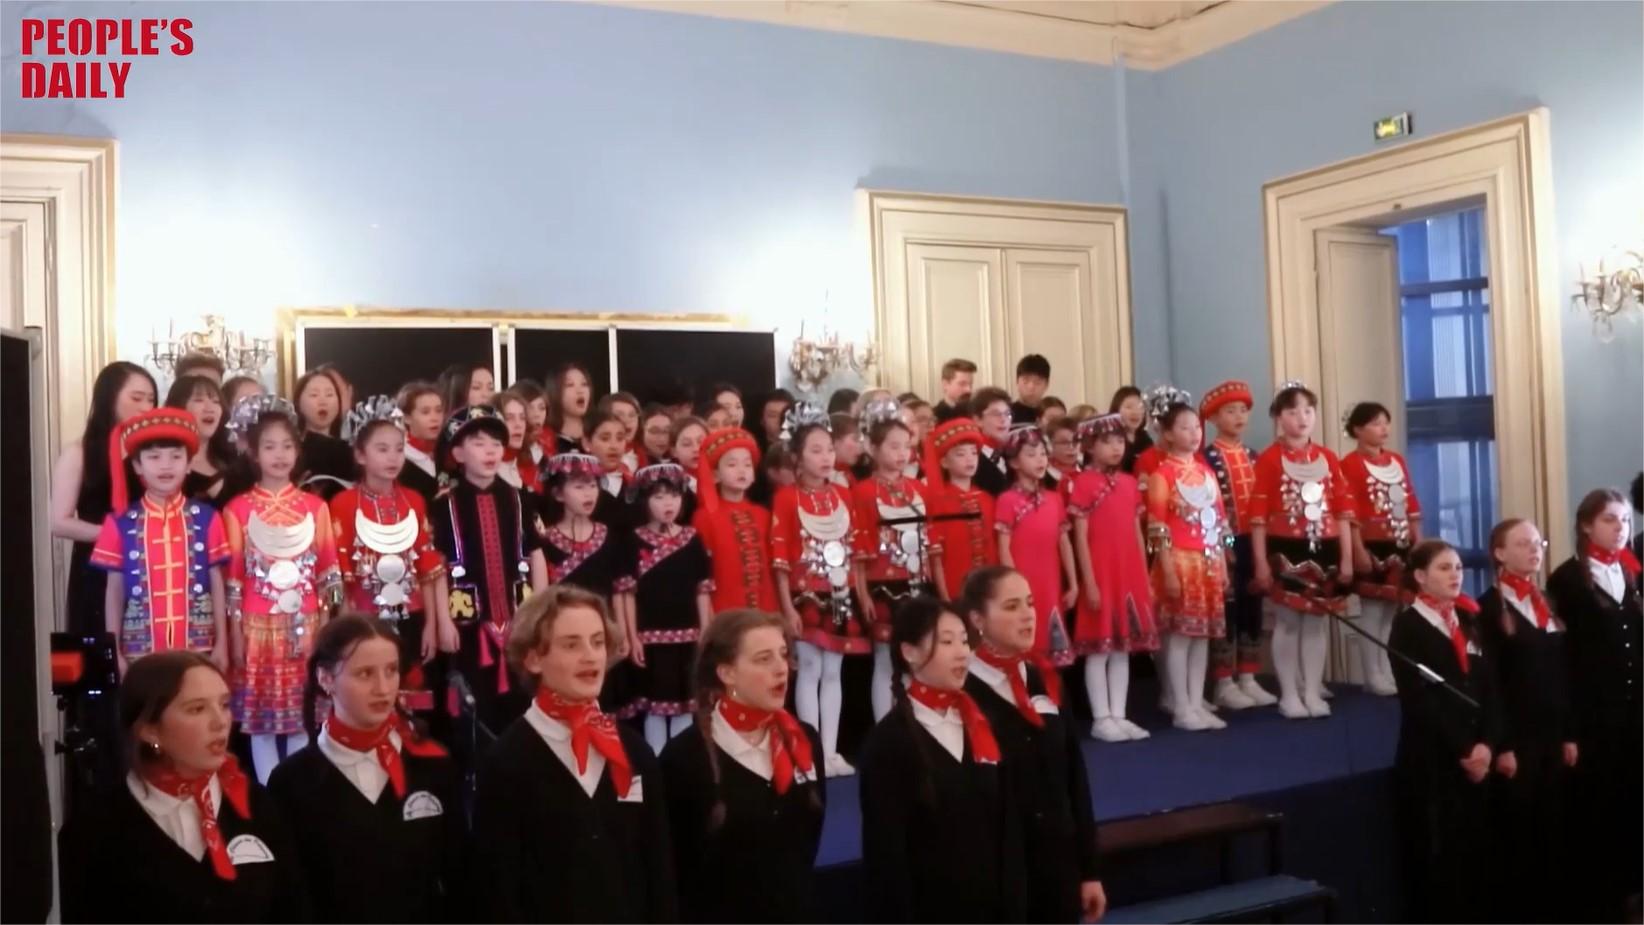 Children's chorus from Hainan brings China, France closer with beautiful singing